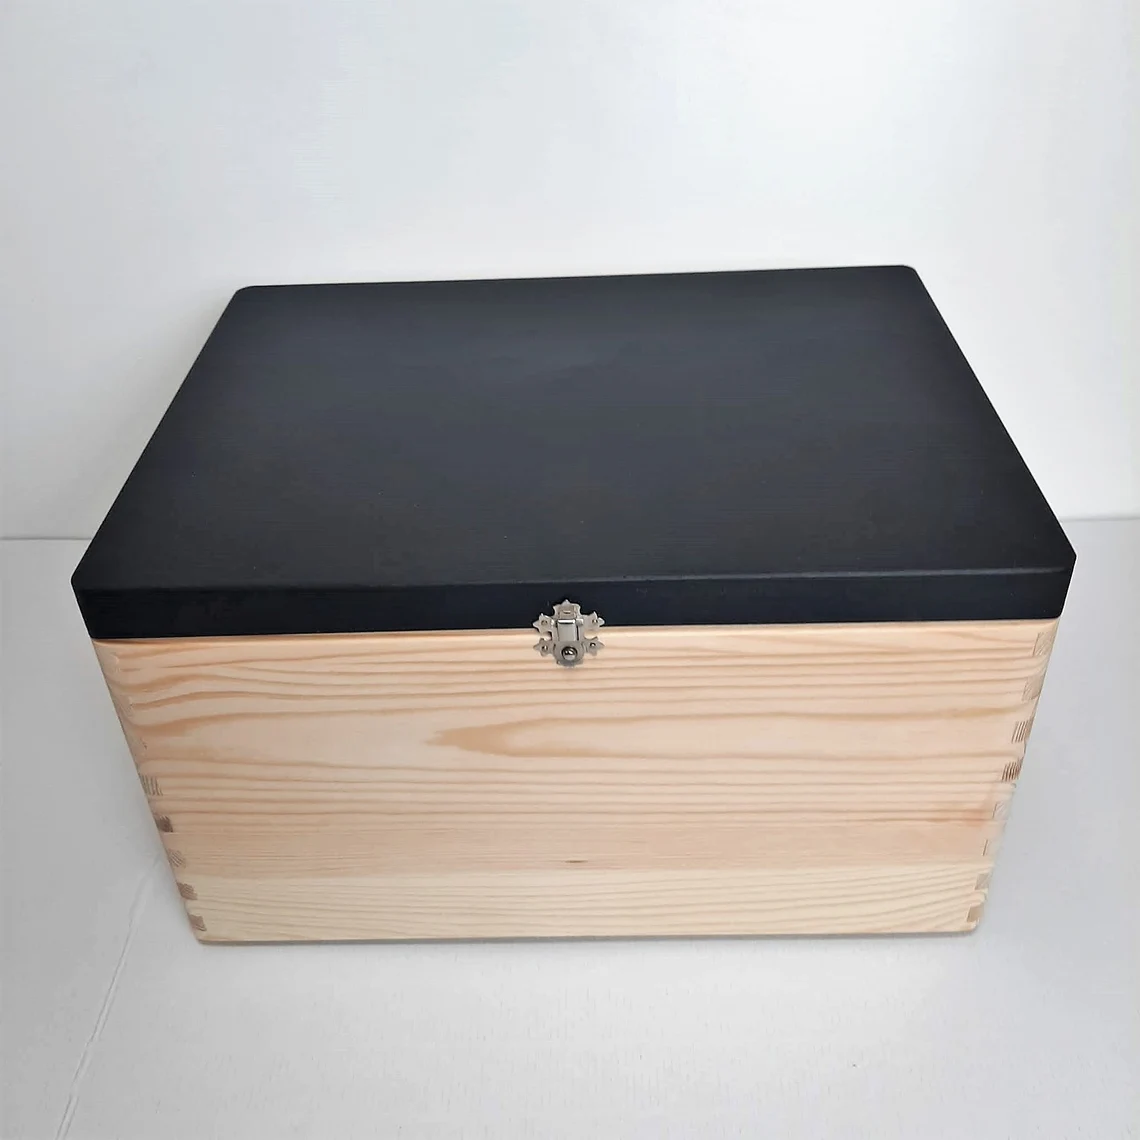 Large Wooden Storage Box With Chalk Painted Lid - 40cm x 30cm x 23cm